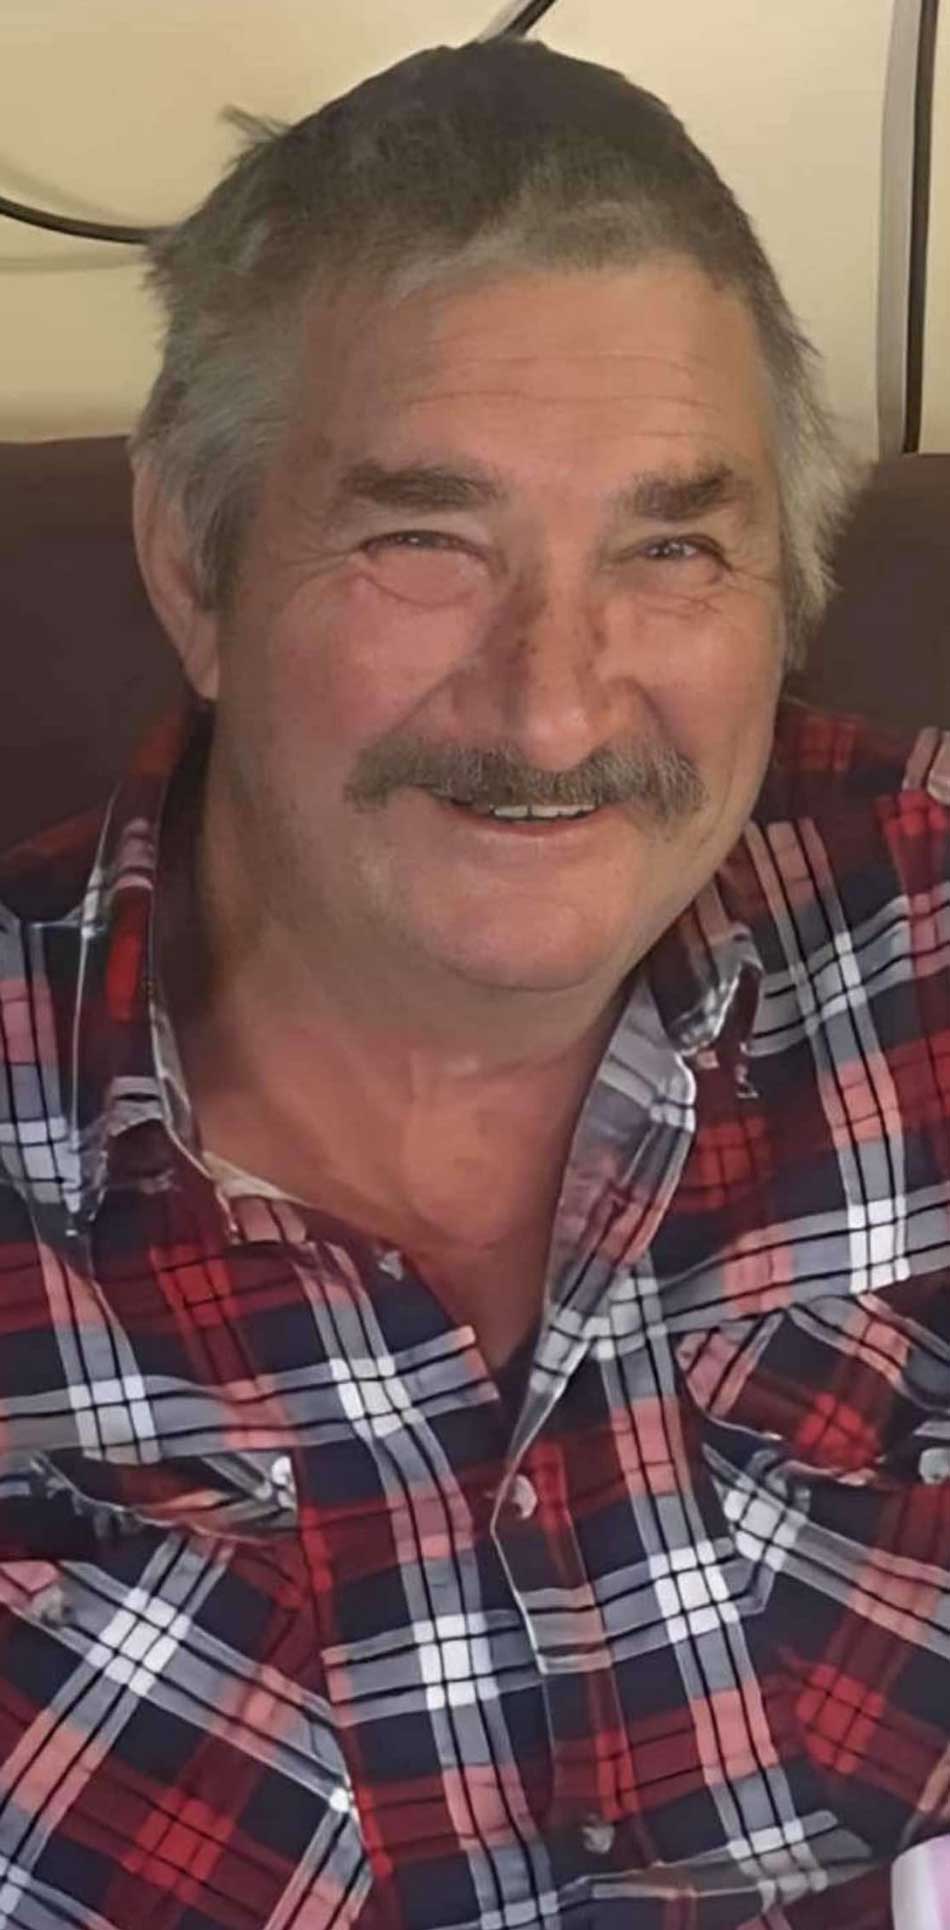 A man with a mustache wearing a plaid shirt.